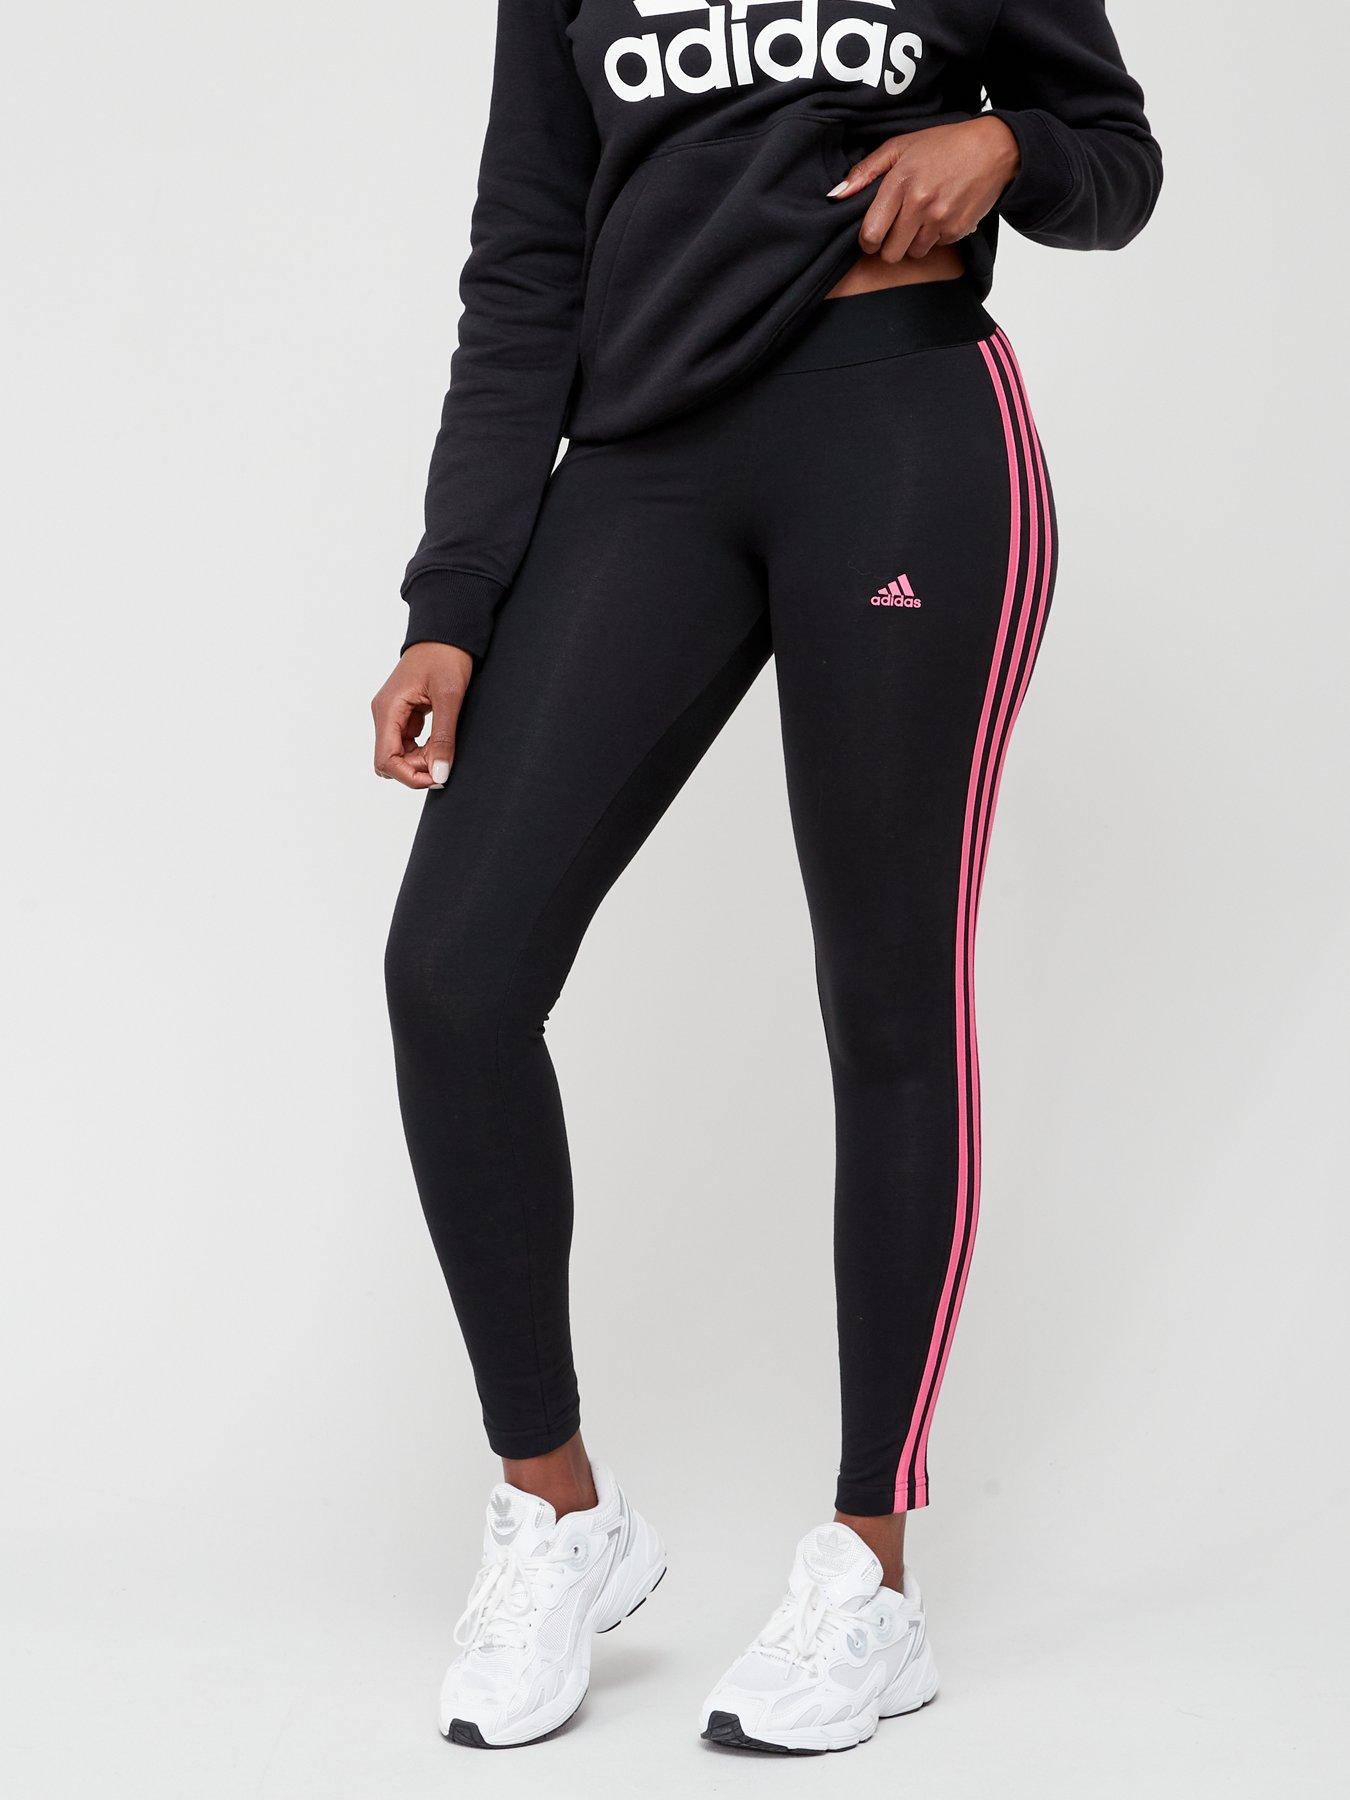 Adidas, Tights & leggings, Womens sports clothing, Sports & leisure